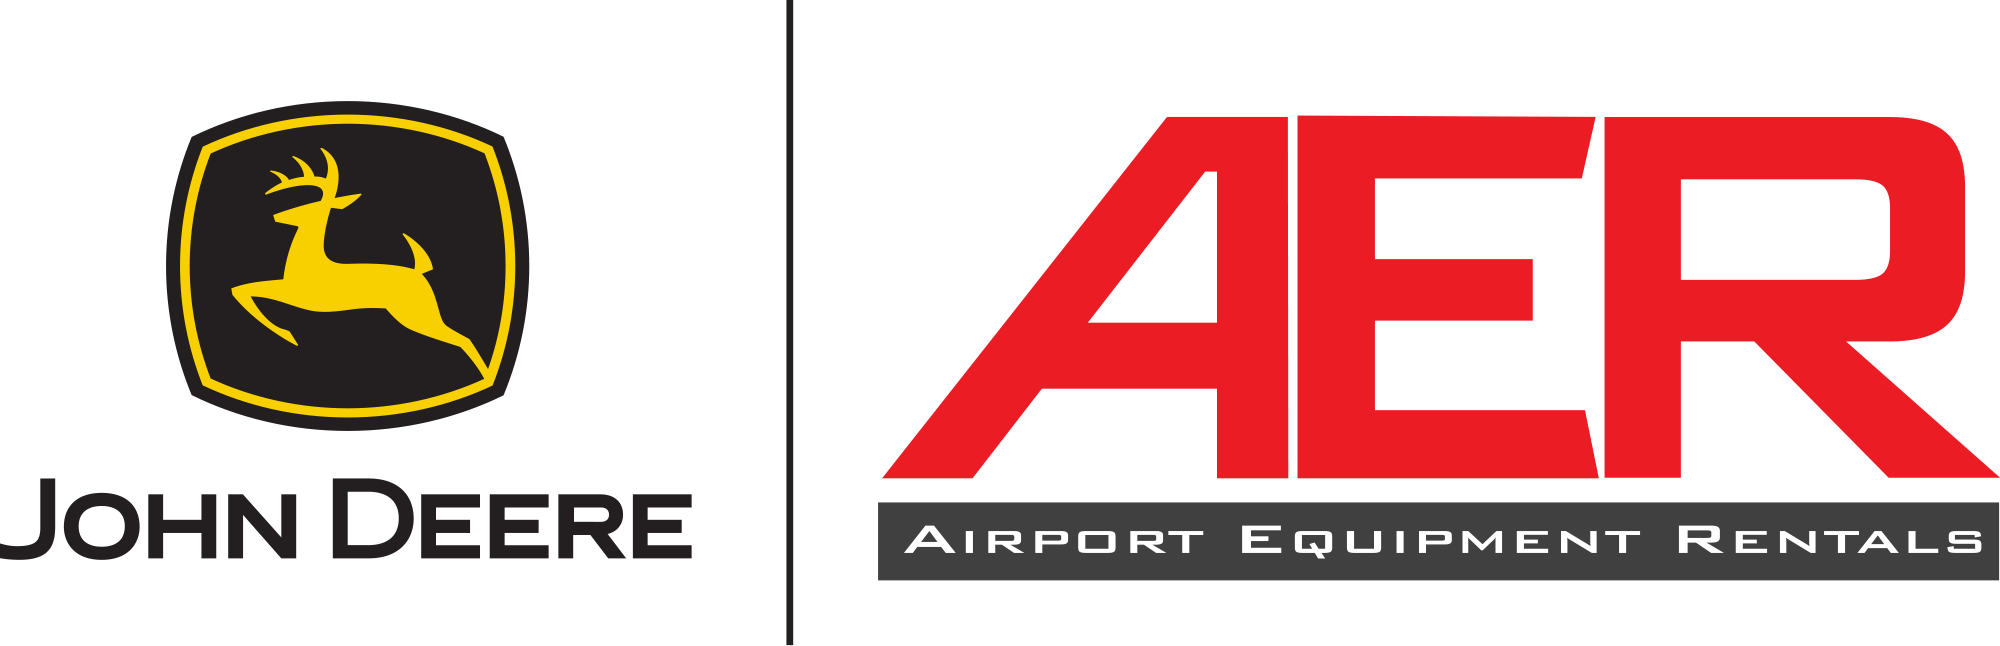 John Deere | Airport Equipment Rentals logos